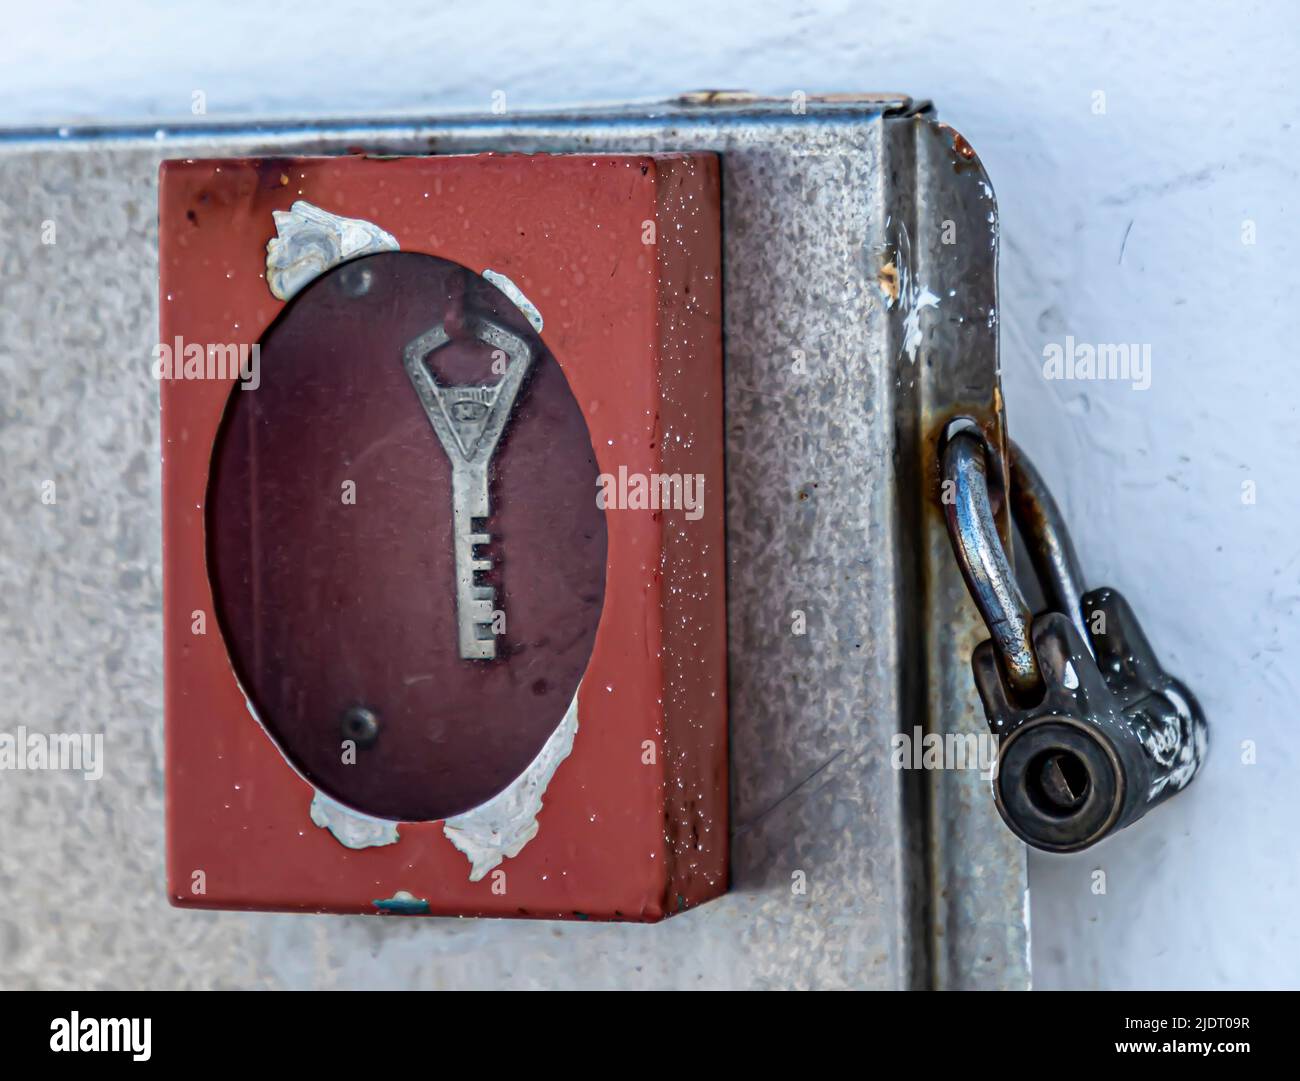 A weather-worn red break-glass key holder on a padlocked metal door. Stock Photo